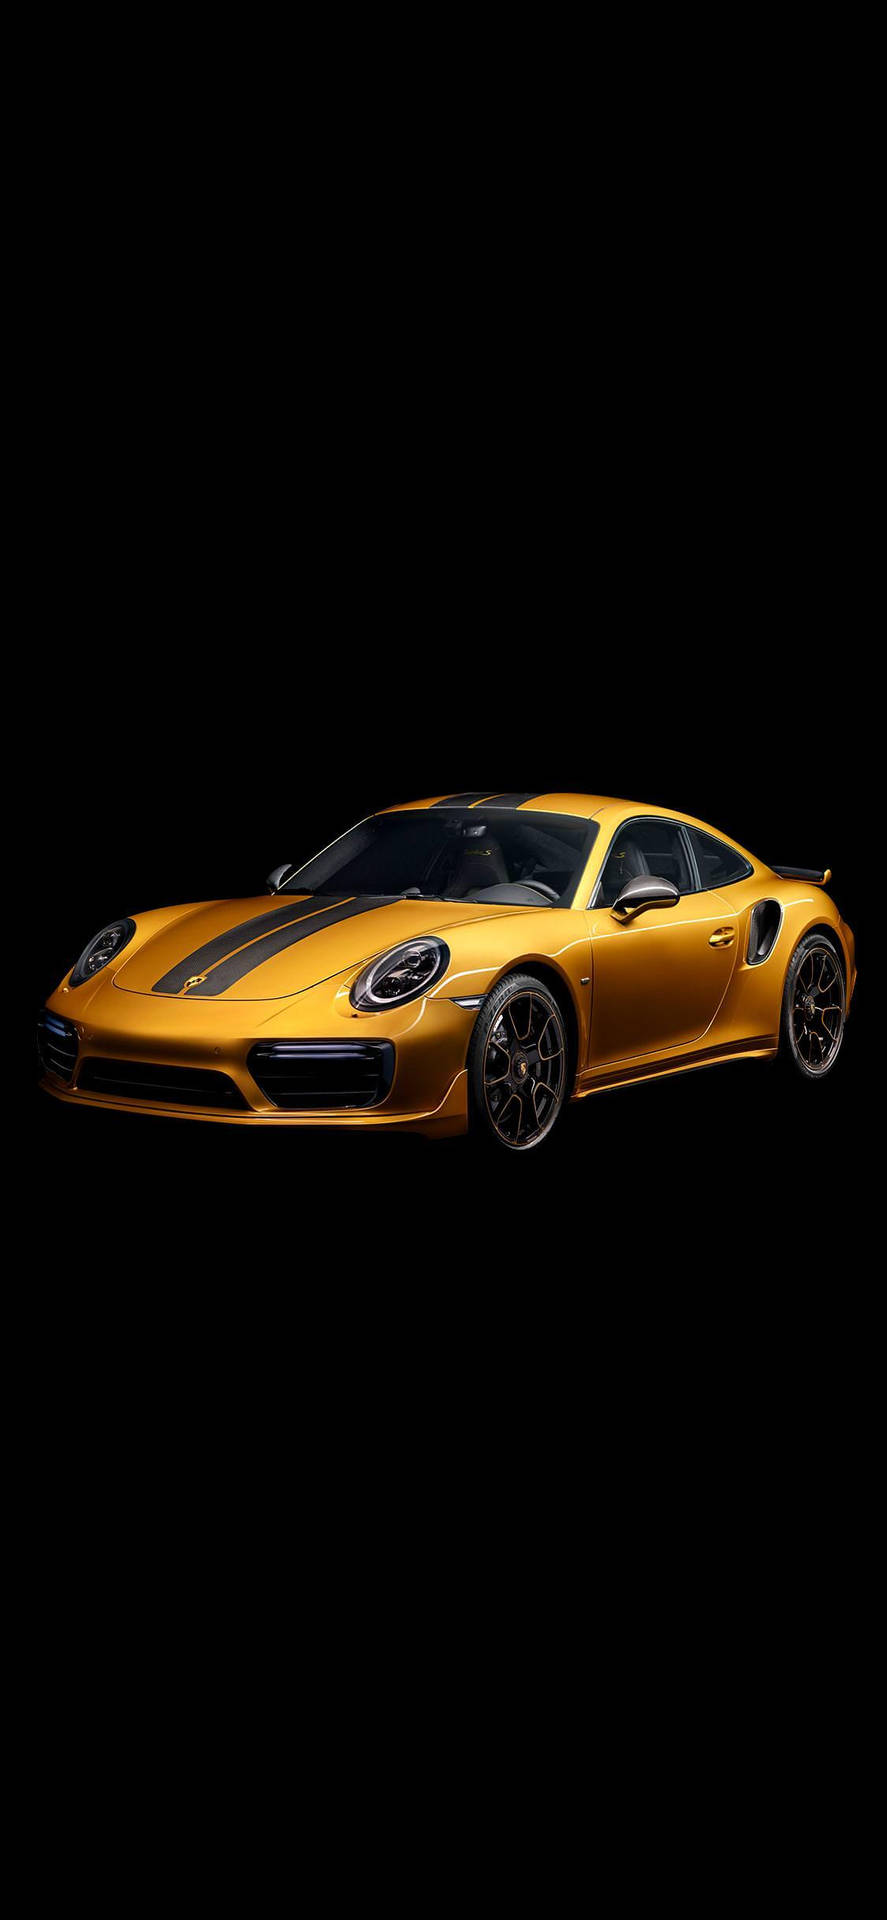 Porsche 911 Turbo S Iphone Car Wallpaper